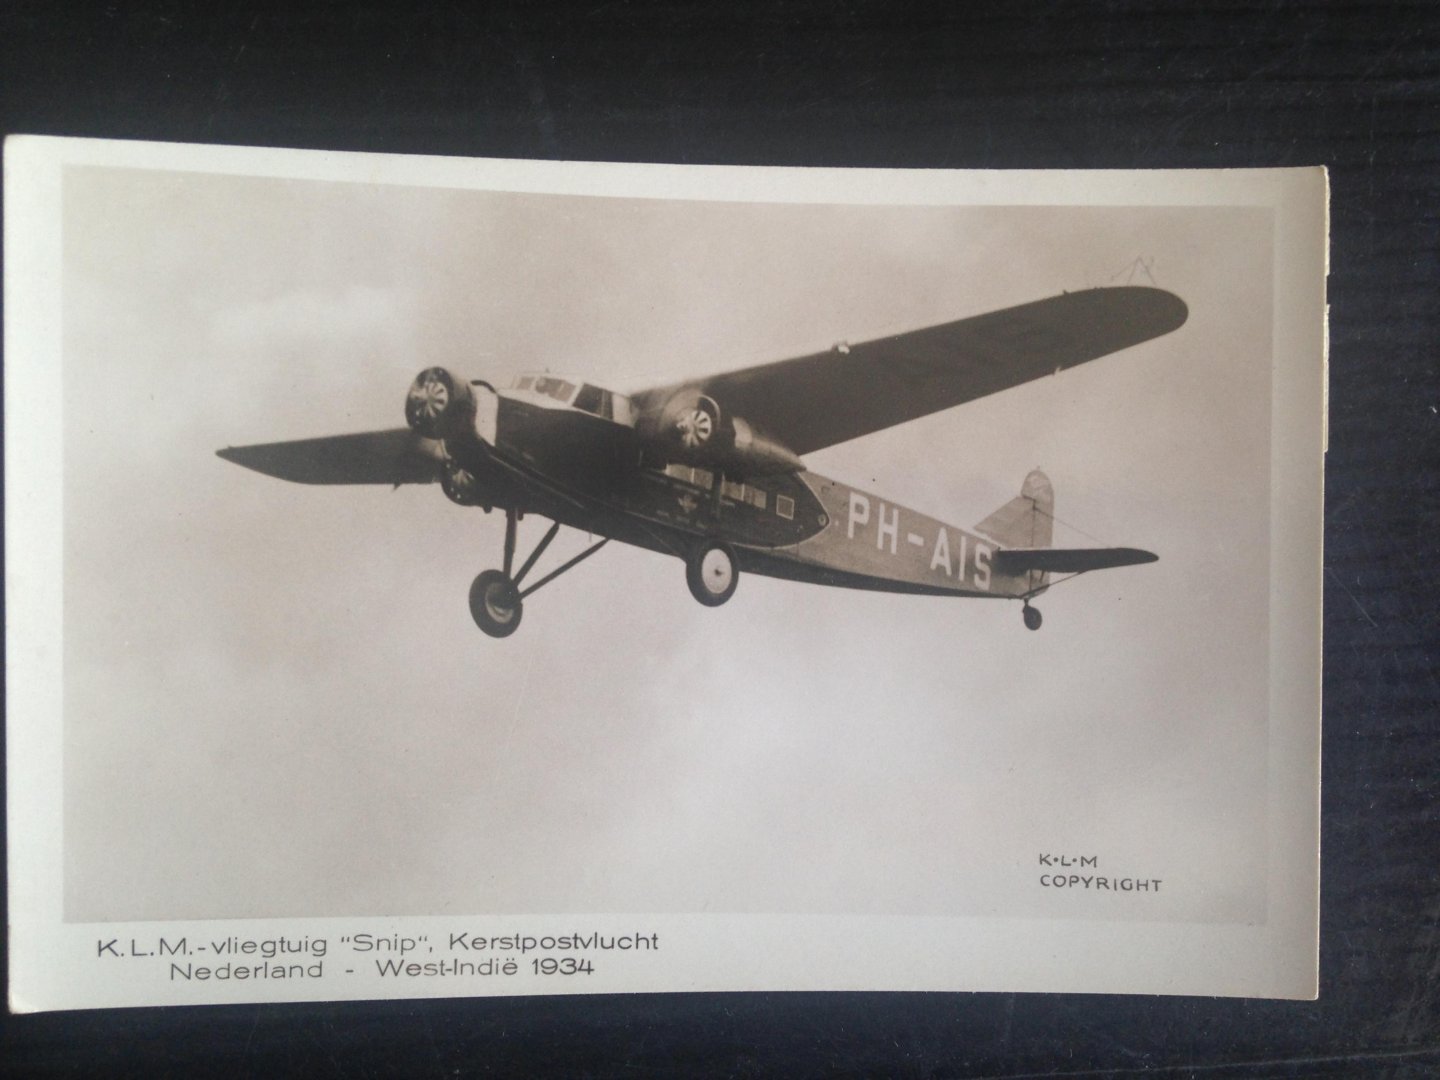  - KLM vliegtuig Snip, Kerstpostvlucht Nederland-Westindie 1934, Gelopen kaart